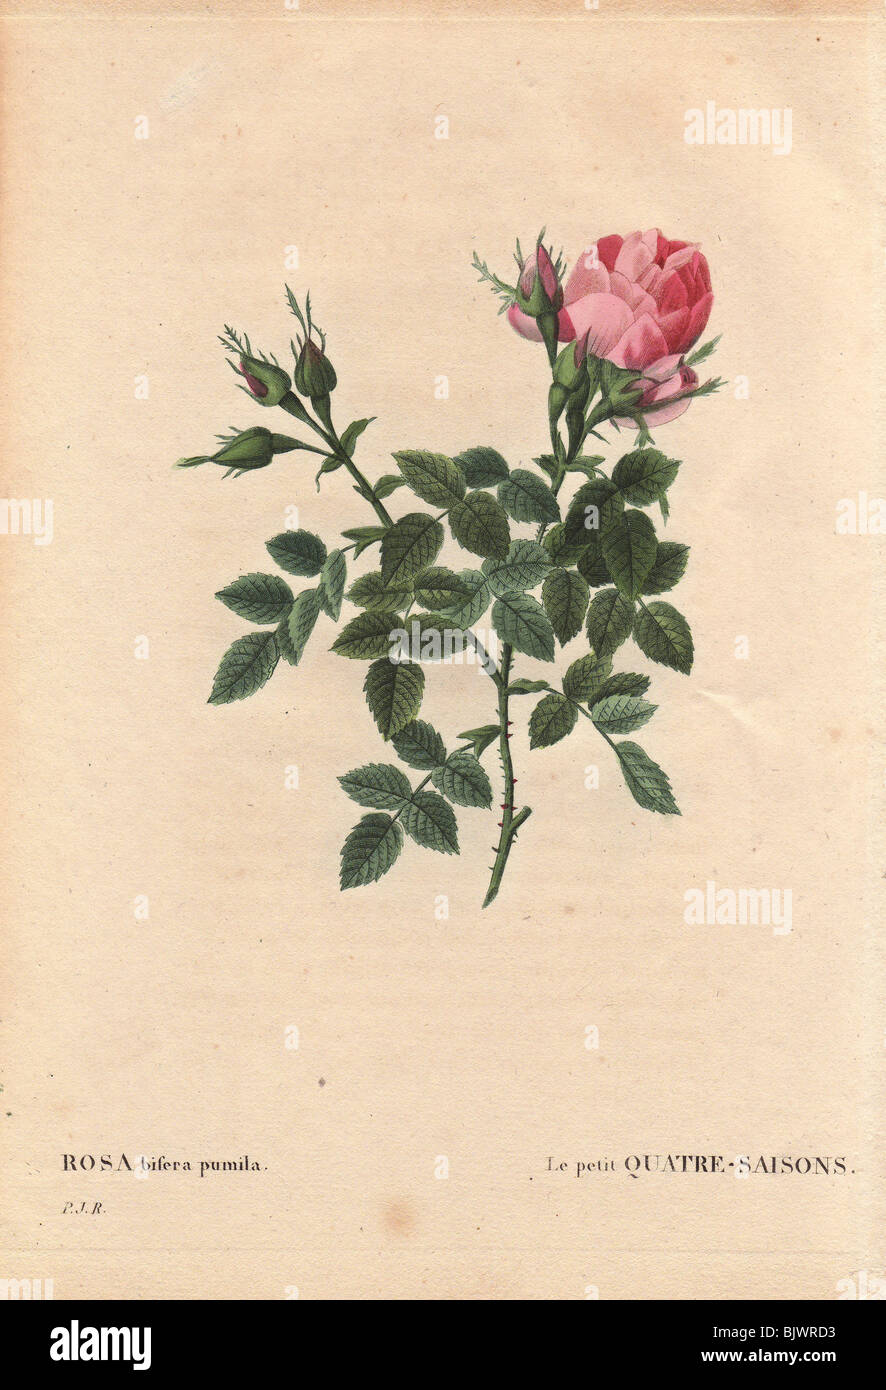 Dwarf four seasons rose with large pink bloom (Rosa bifera pumila). Stock Photo